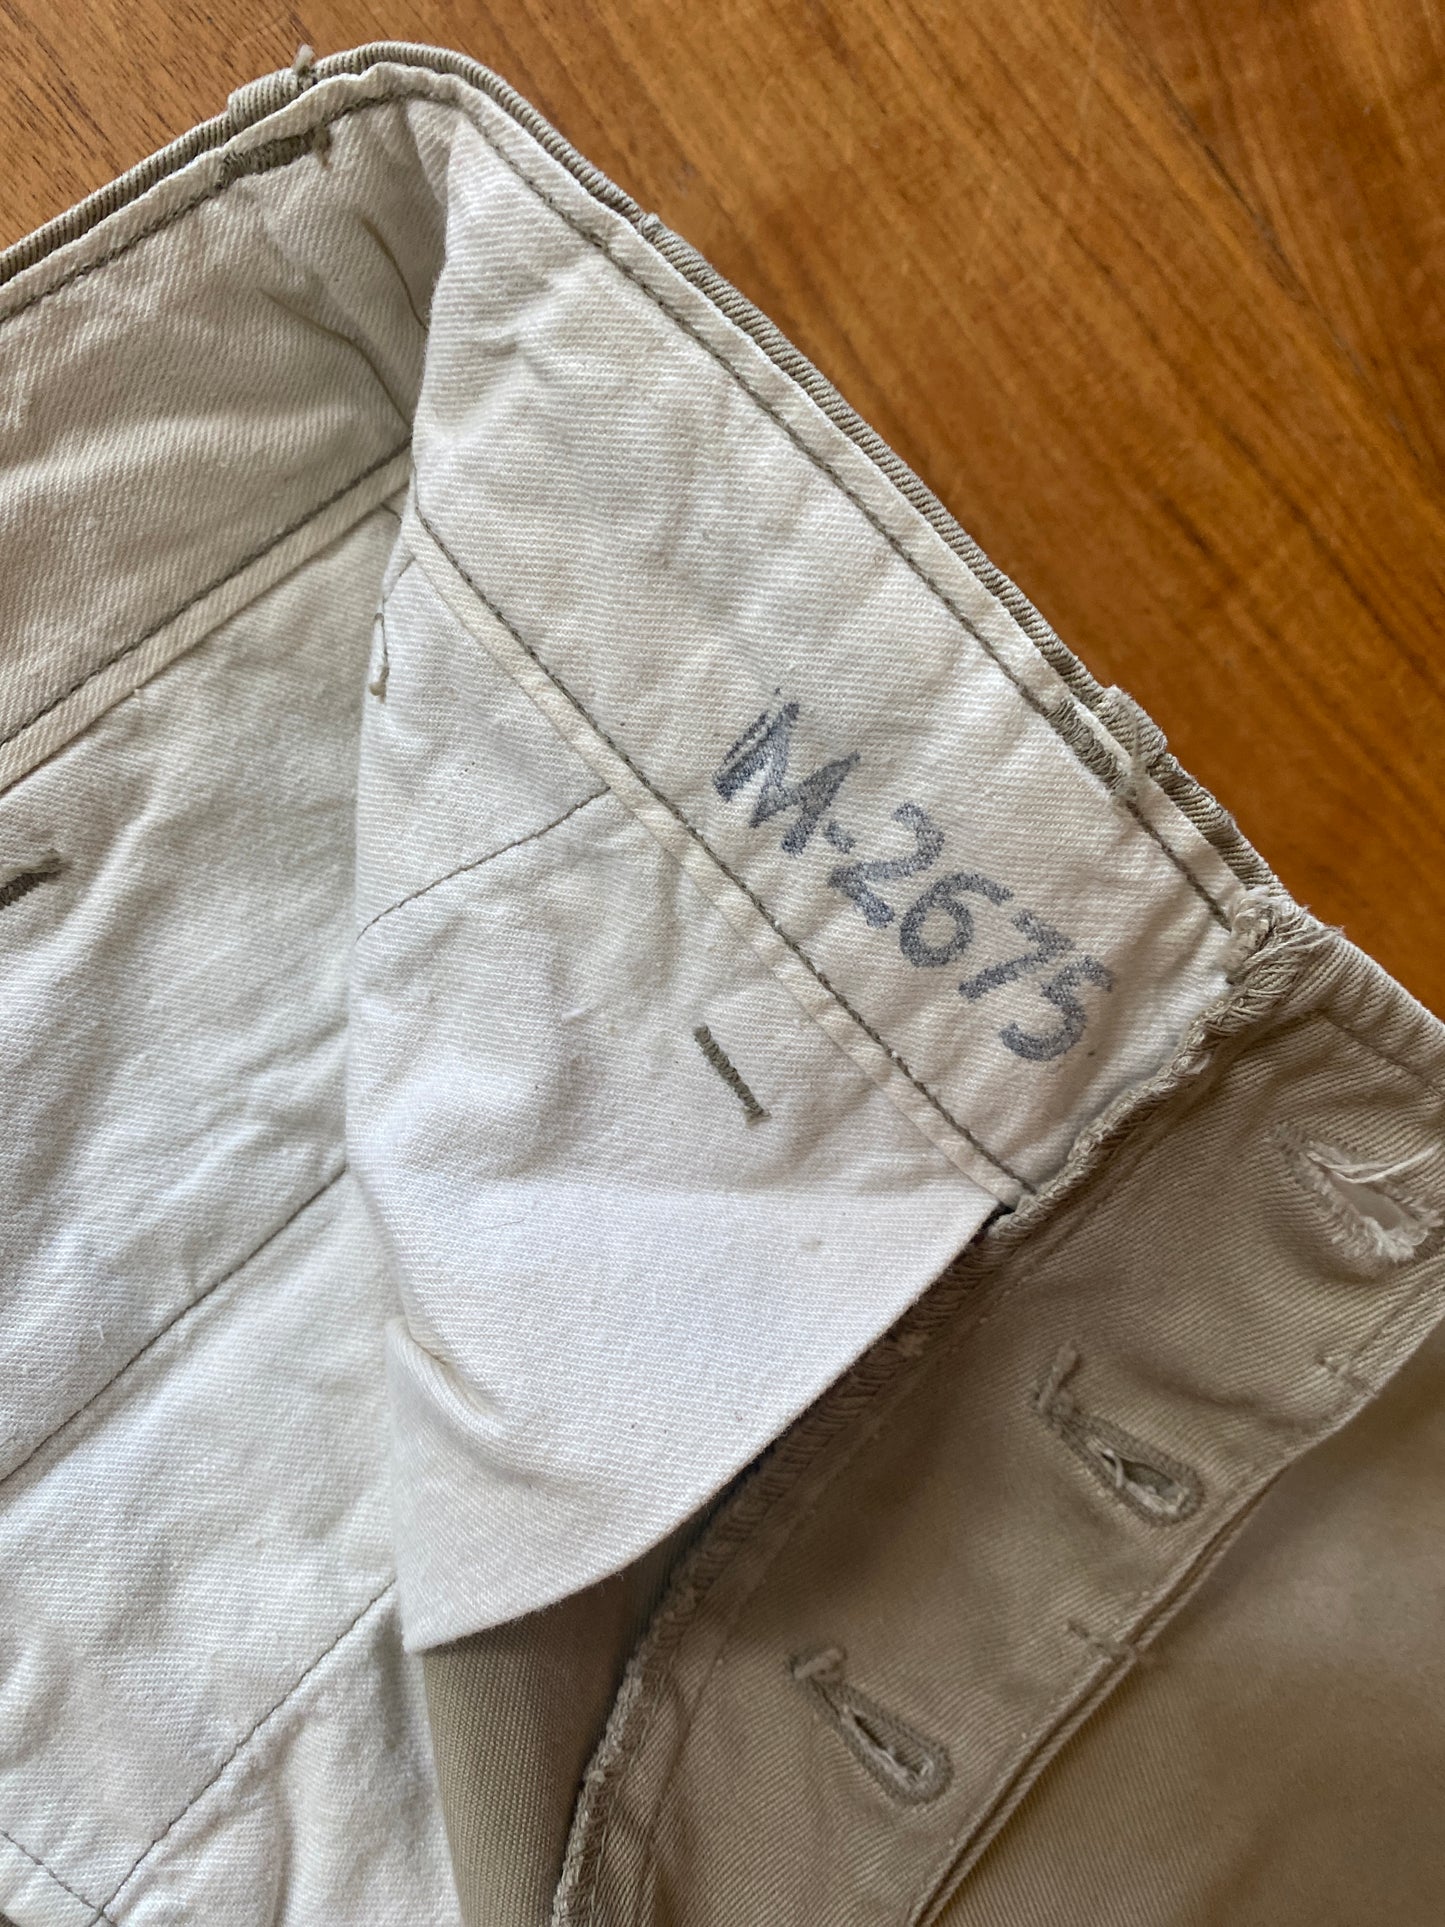 WWII Era Cotton Khaki Trousers Size 29W x 28.5L